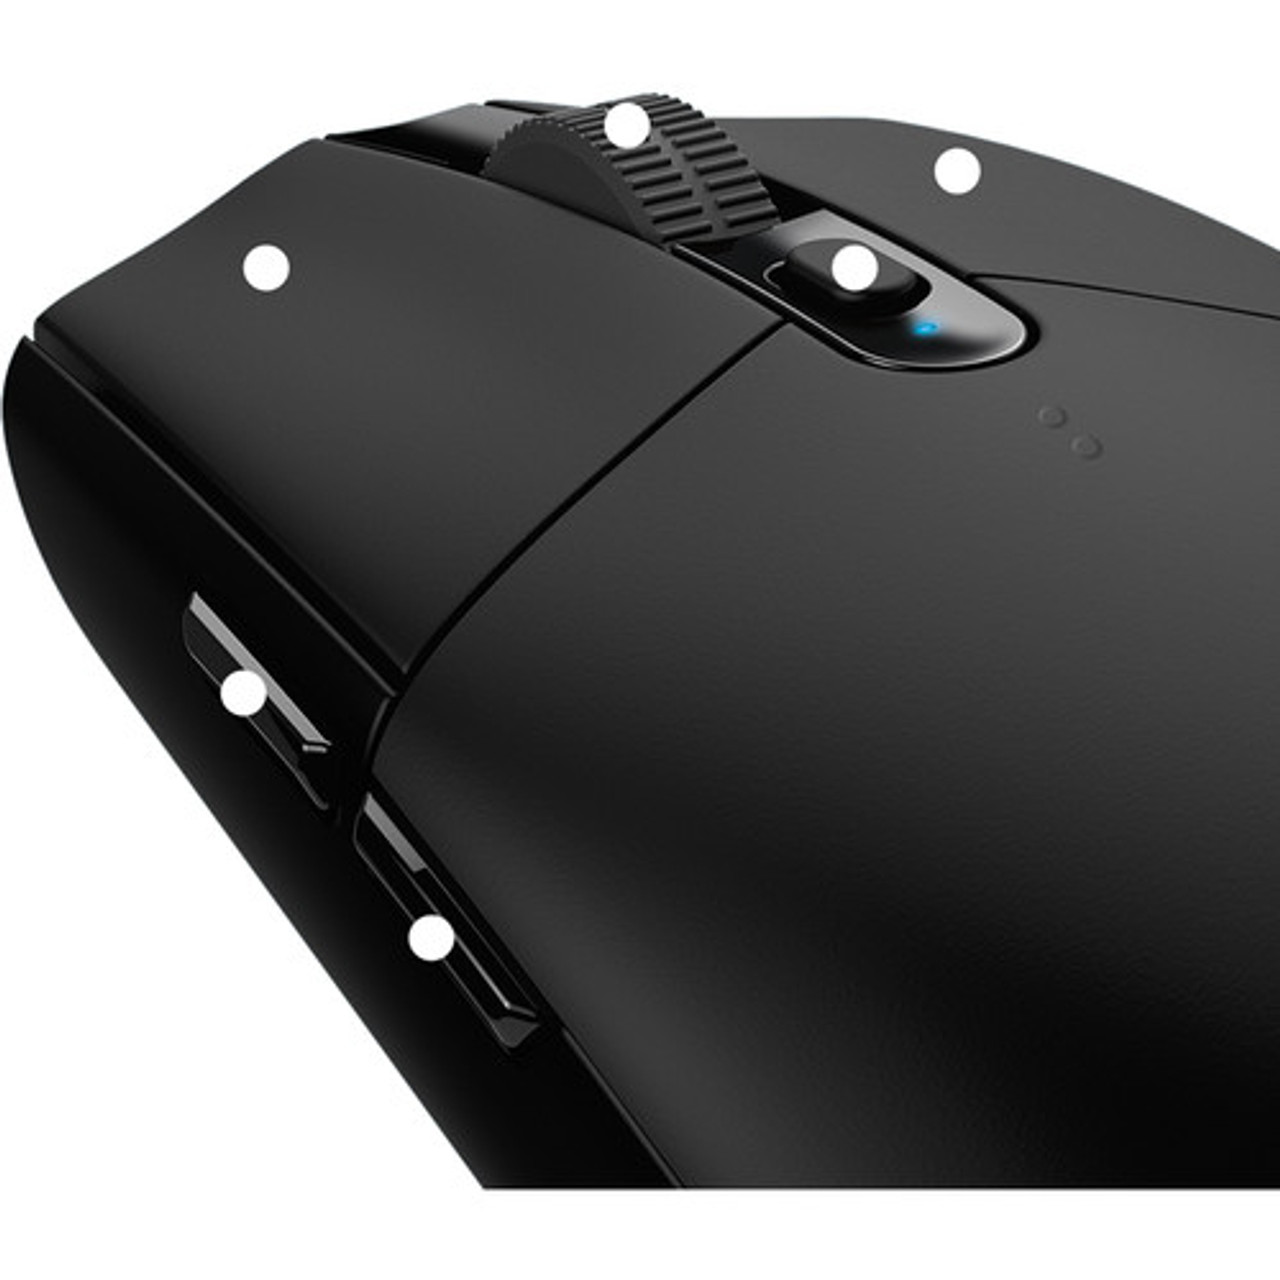 Logitech G305 6-Button Mouse Wireless Optical COMPUTERS Bluetooth | BLACK | LEBANON 910-005280 | AYOUB